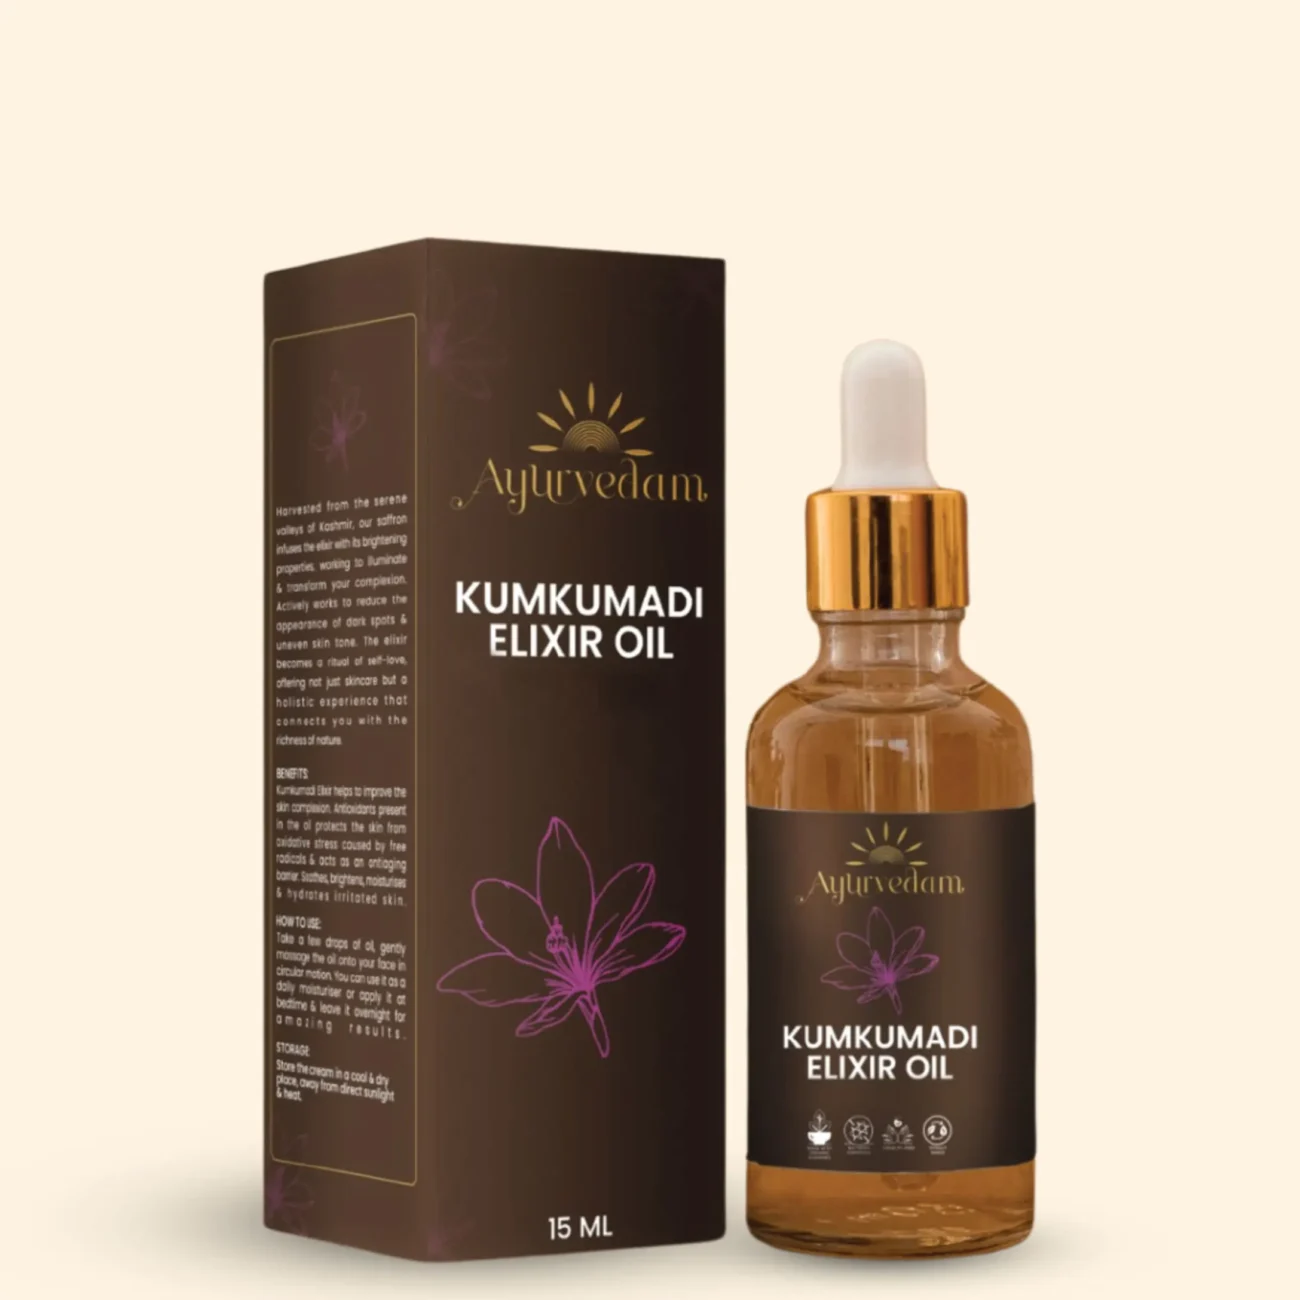 A bottle of Kumkumadi Elixir Oil by Ayurvedam - Buy Ayurvedic Medicines Online